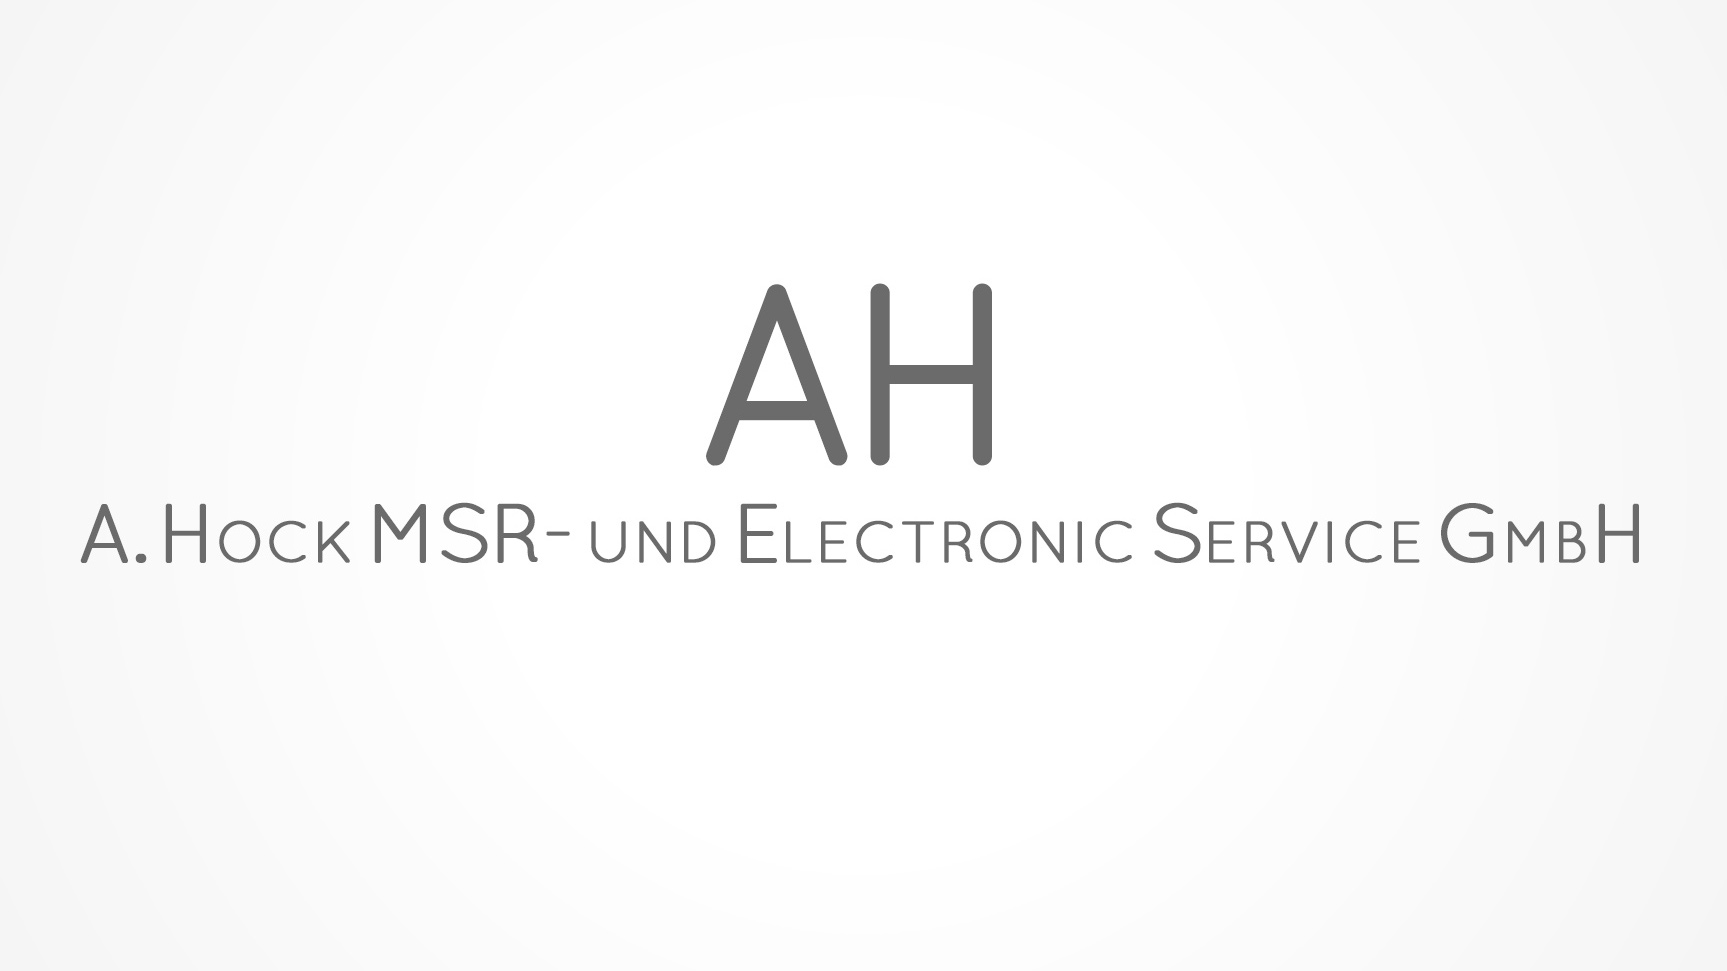 A. Hock MSR- und Electronic Service GmbH